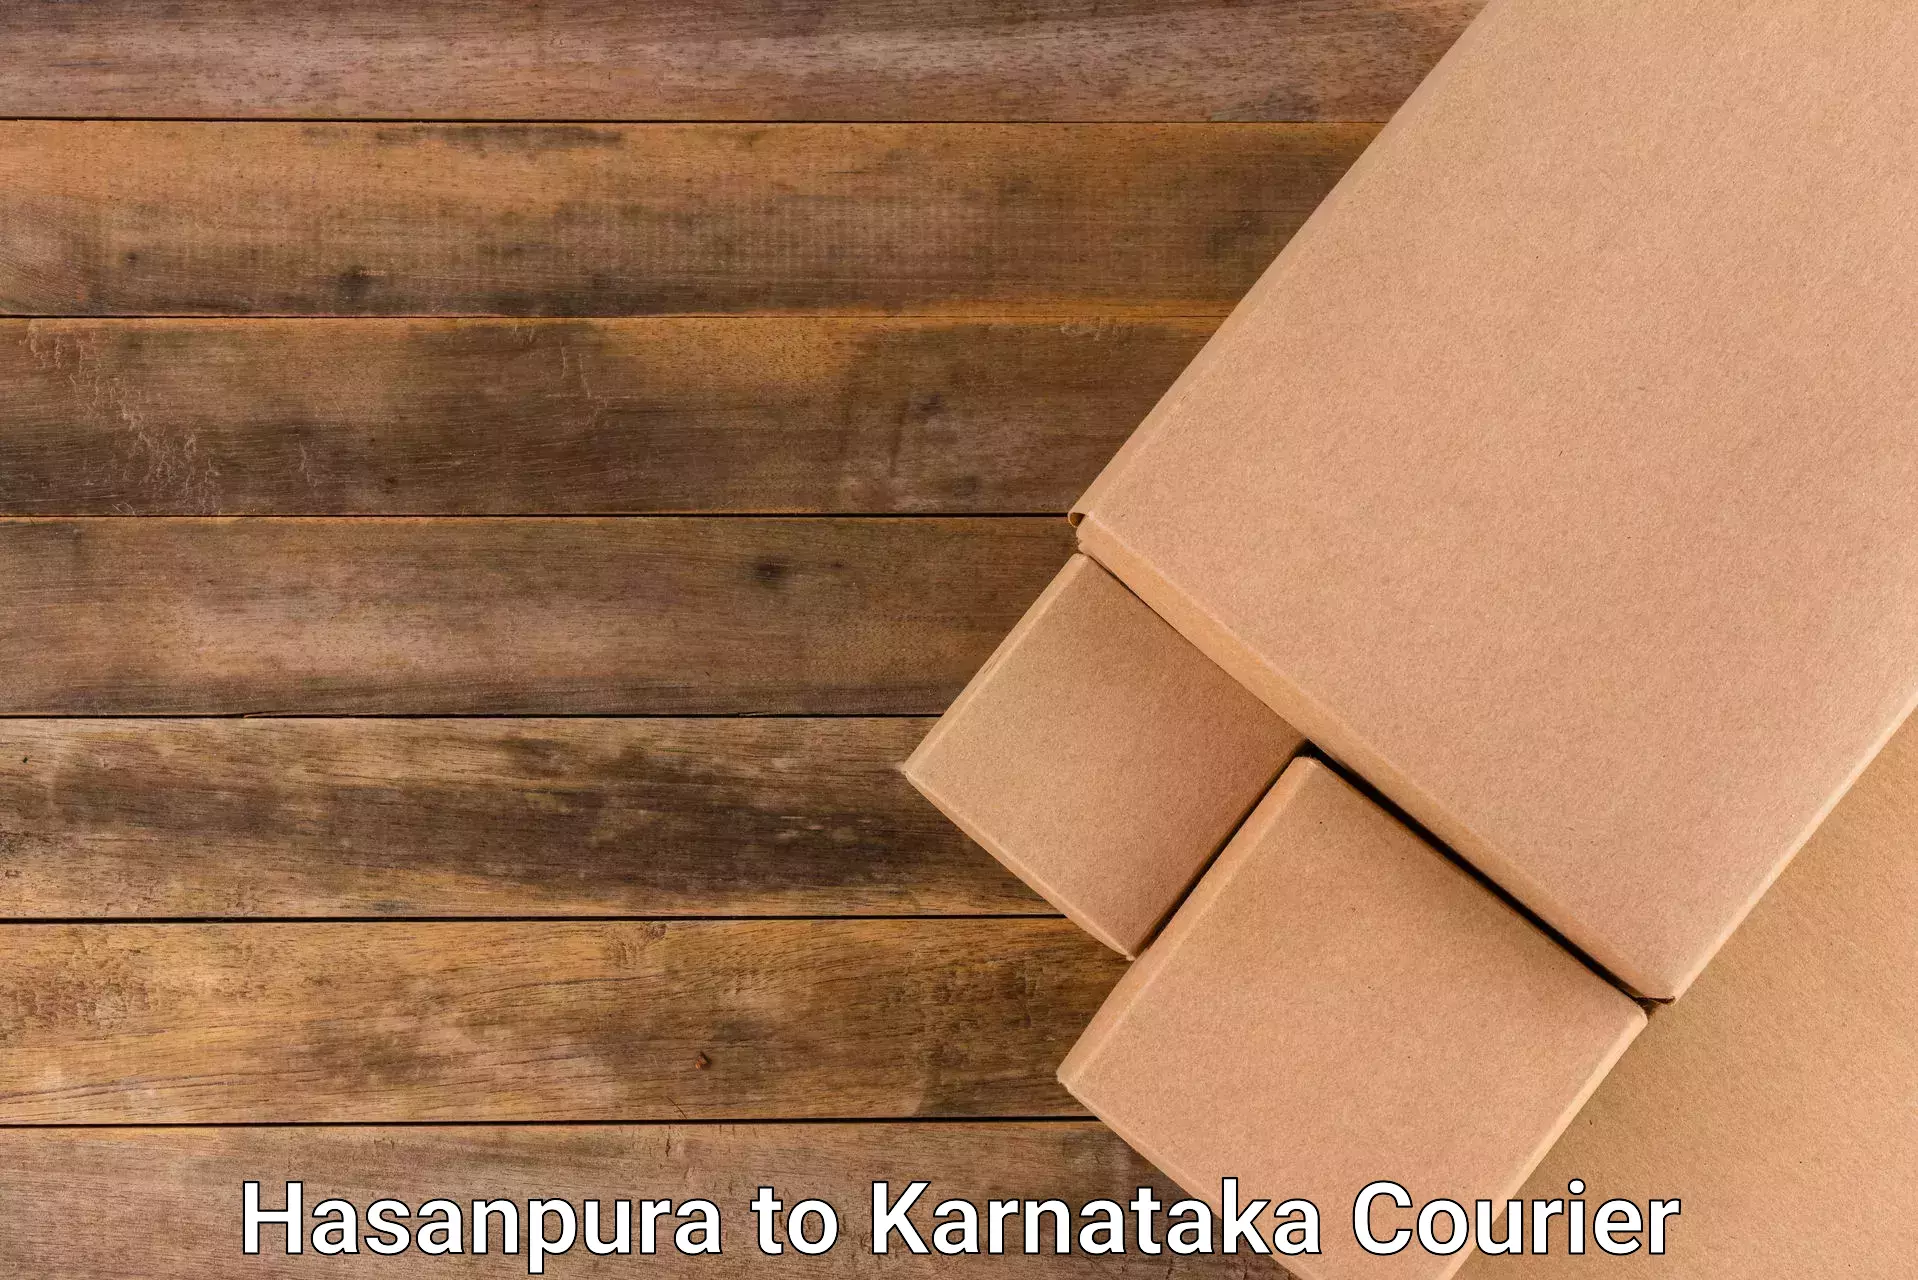 Reliable delivery network Hasanpura to Karnataka